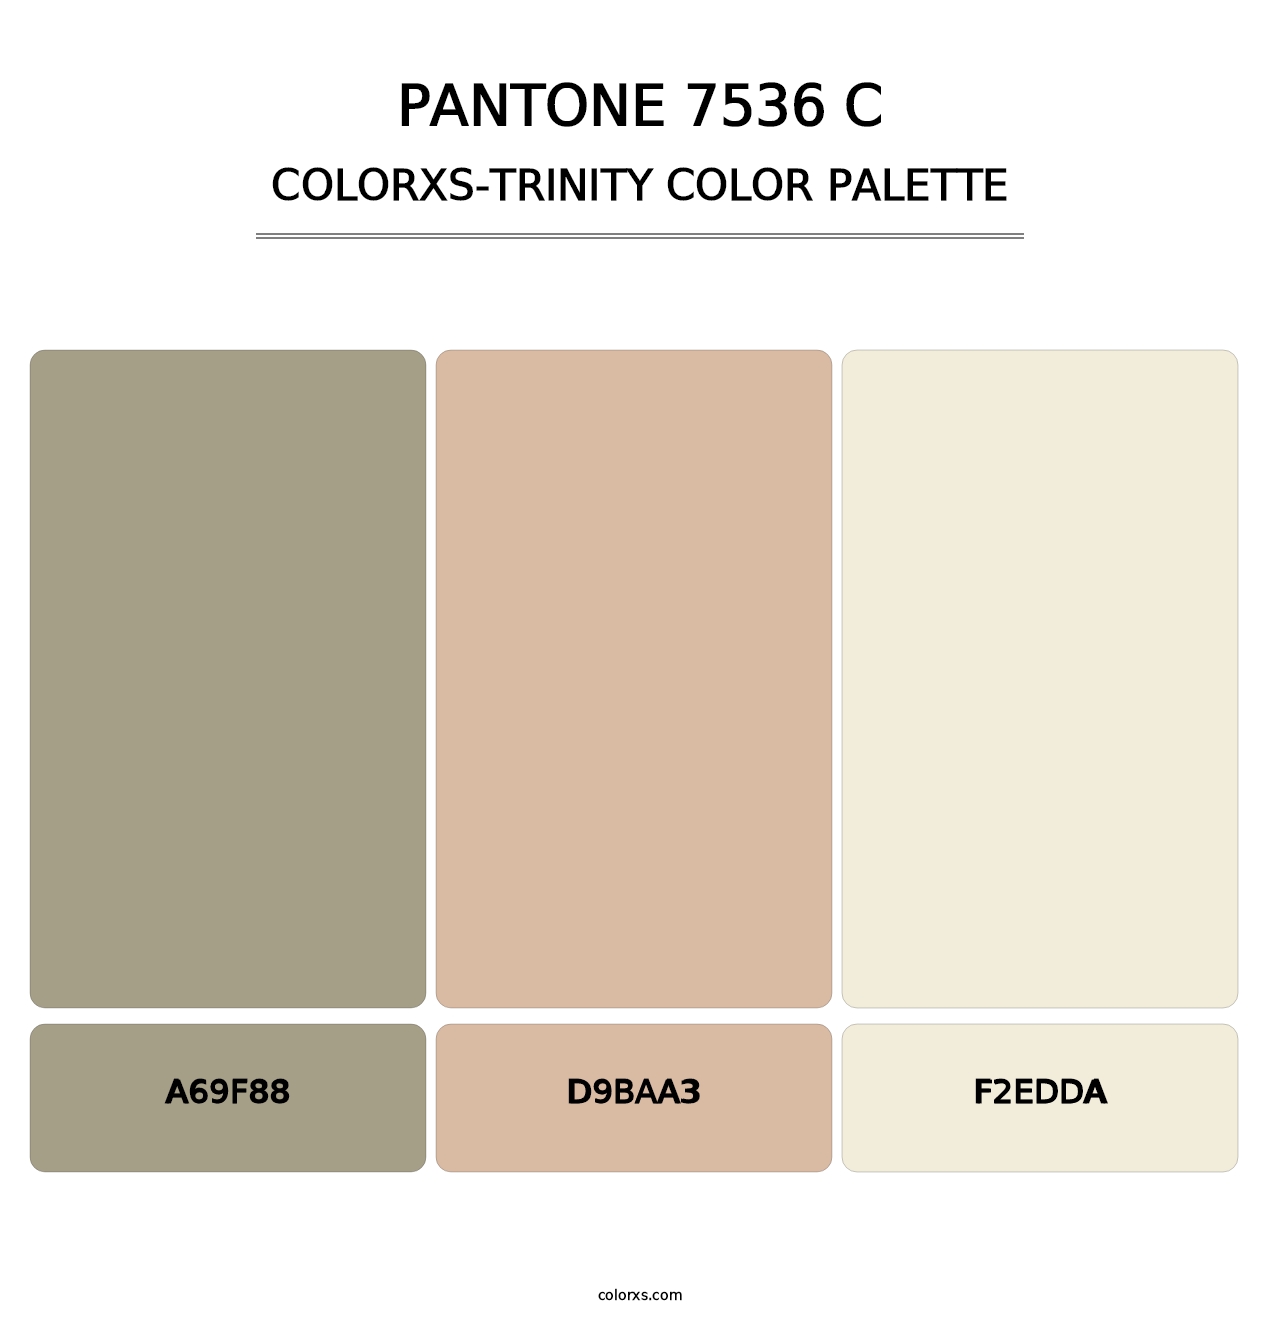 PANTONE 7536 C - Colorxs Trinity Palette